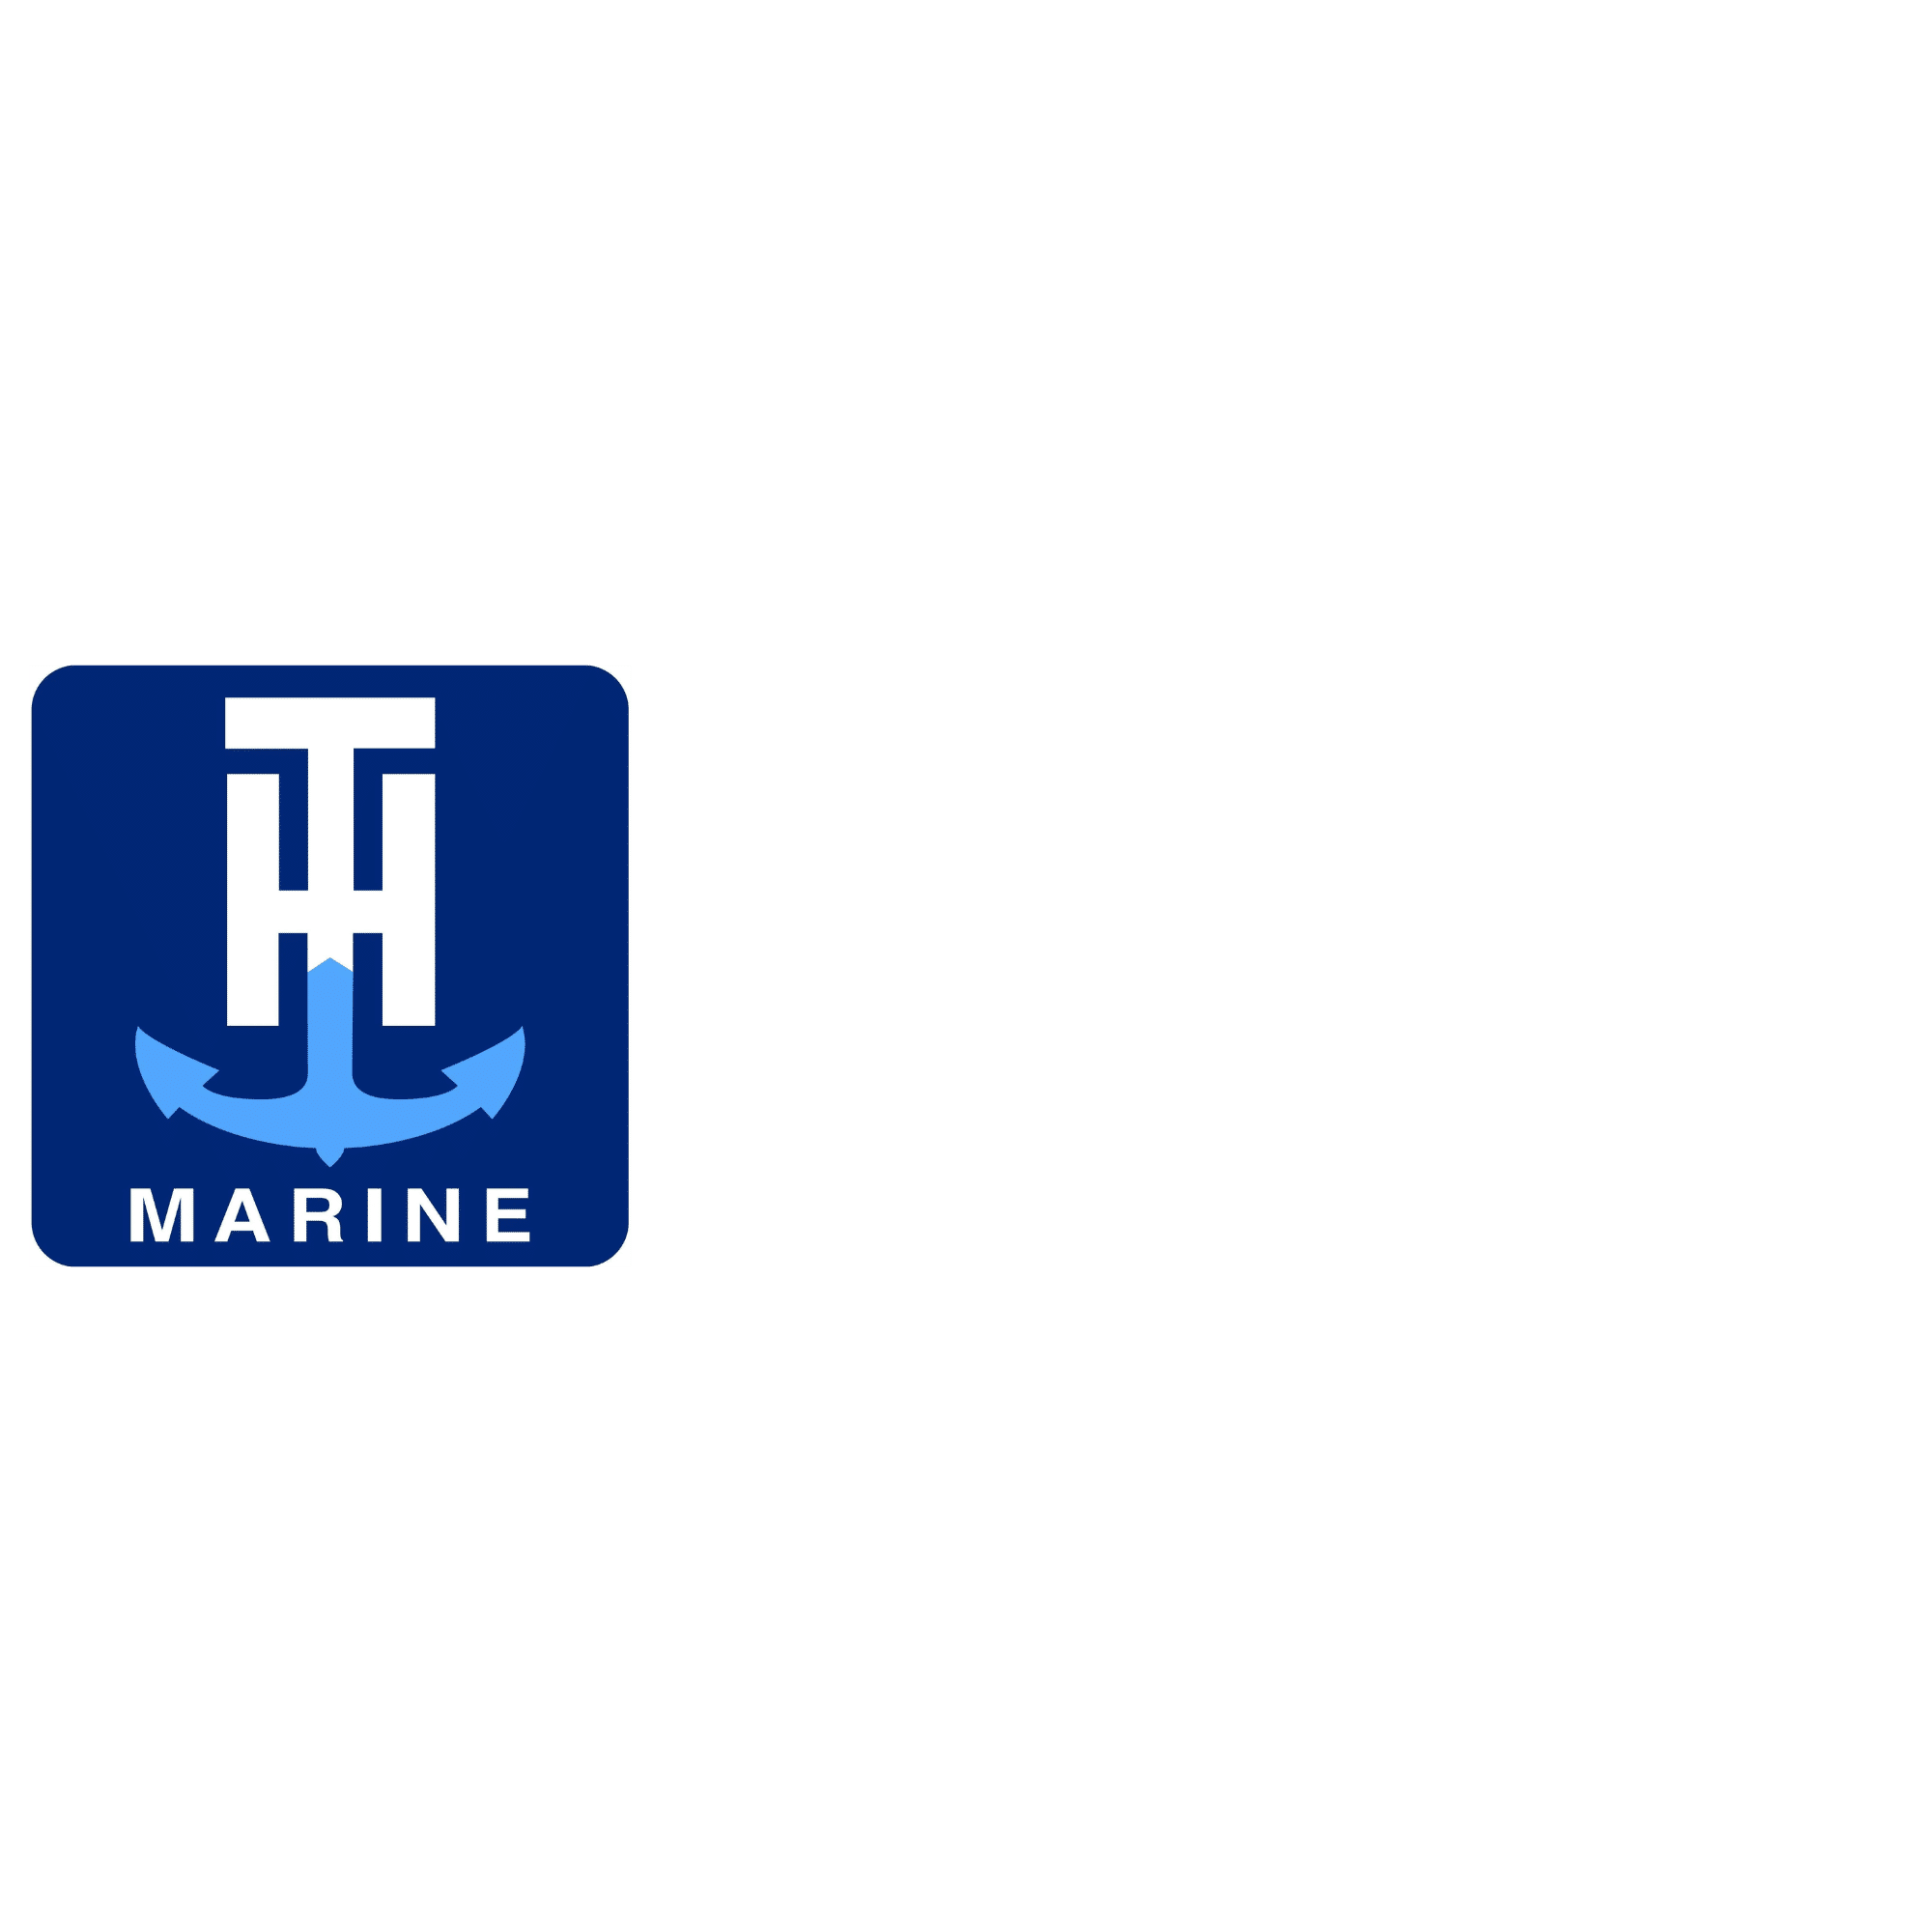 T-H Marine Business Transformation